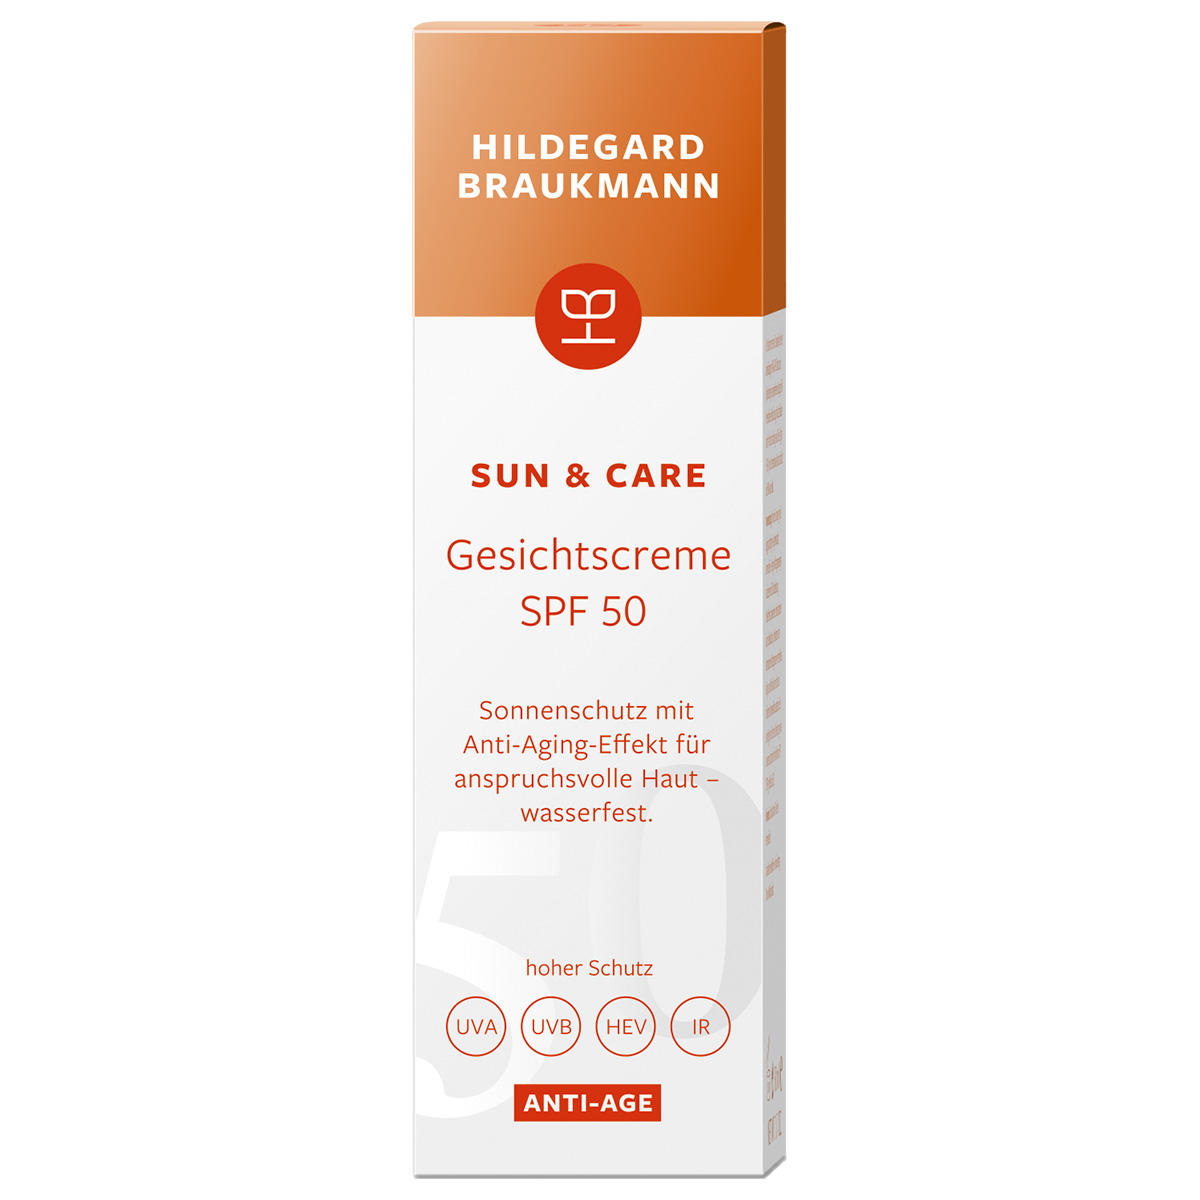 Hildegard Braukmann sun & care Anti-Age Gesichtscreme SPF 50 50 ml - 2